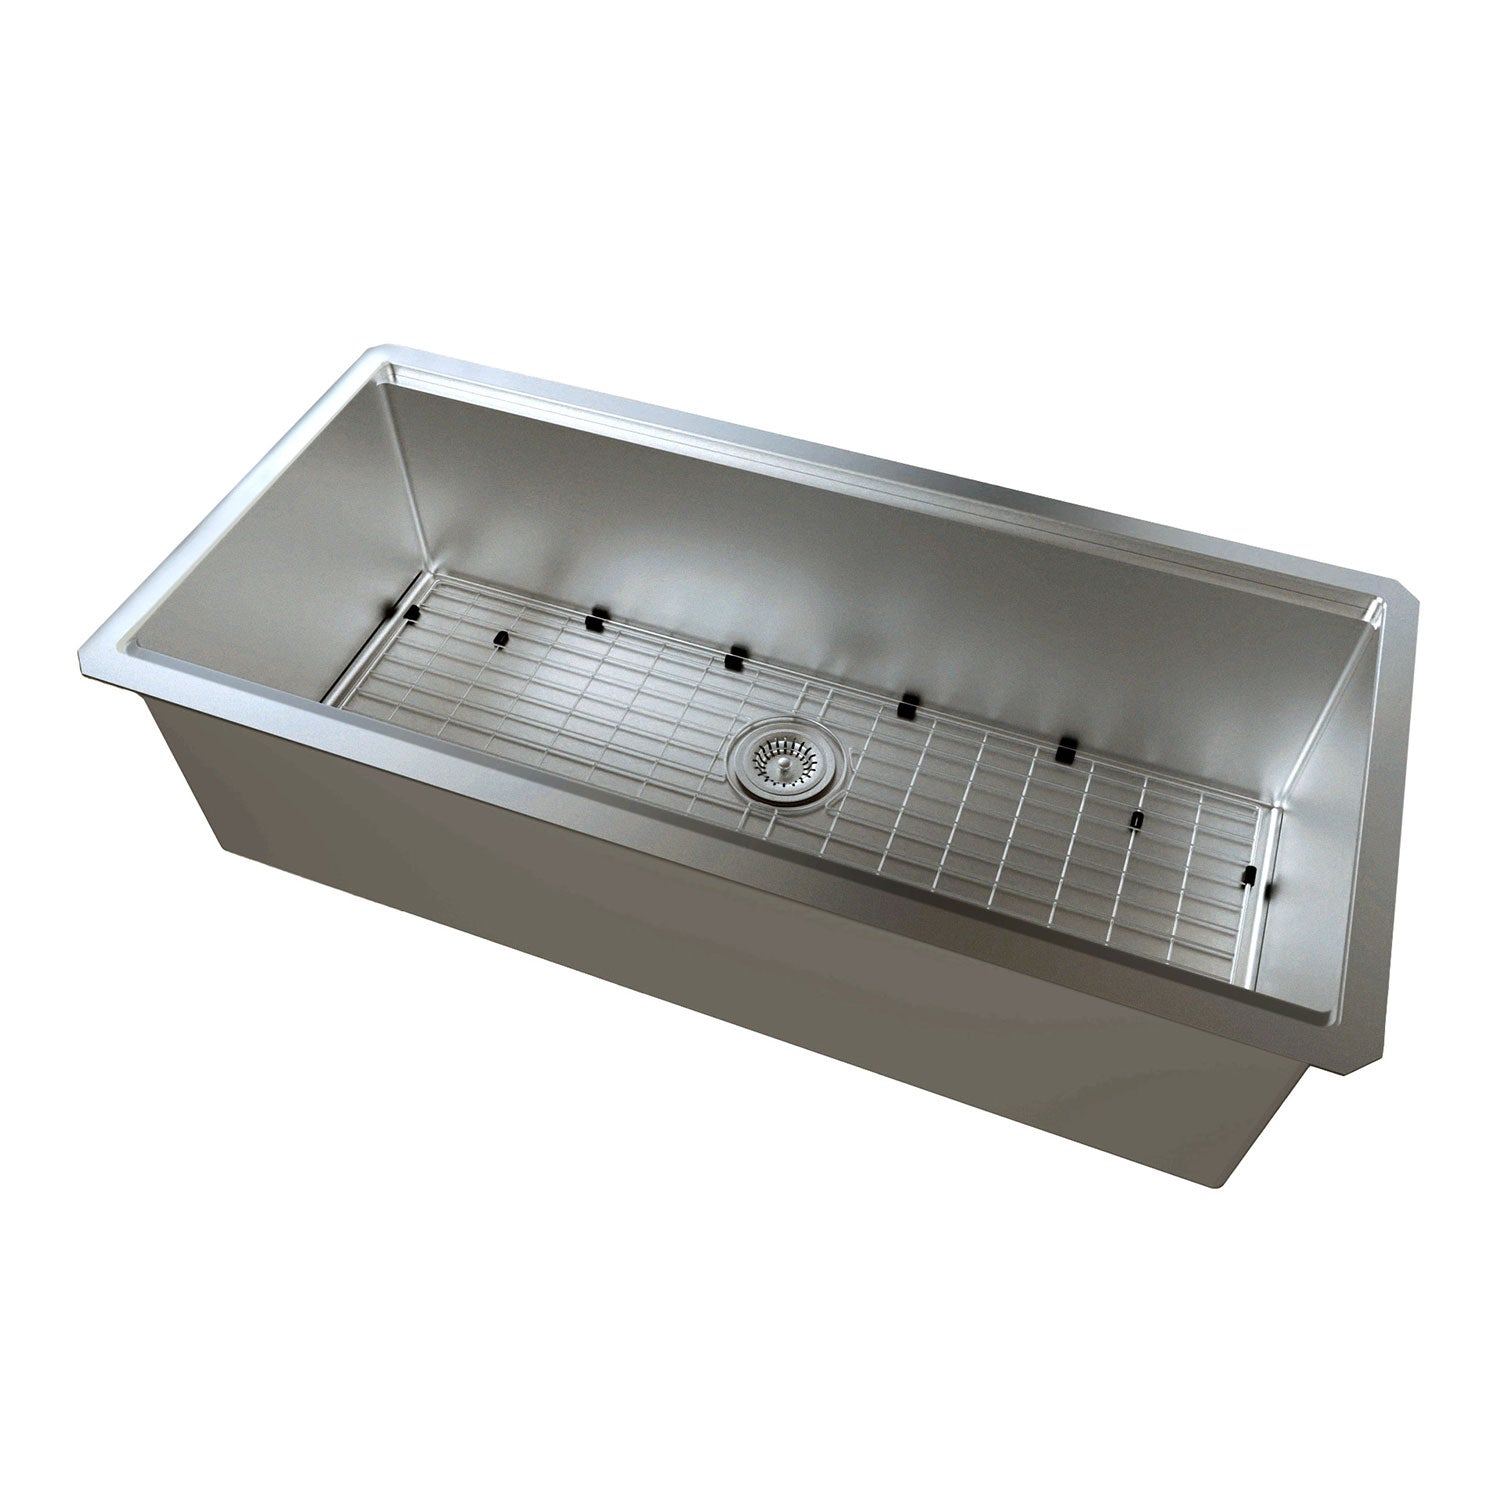 DAX Workstation Single Bowl Undermount Kitchen Sink 40 x 18 - R10 - 18G. Accessories Included (DX-WS4019-R10)